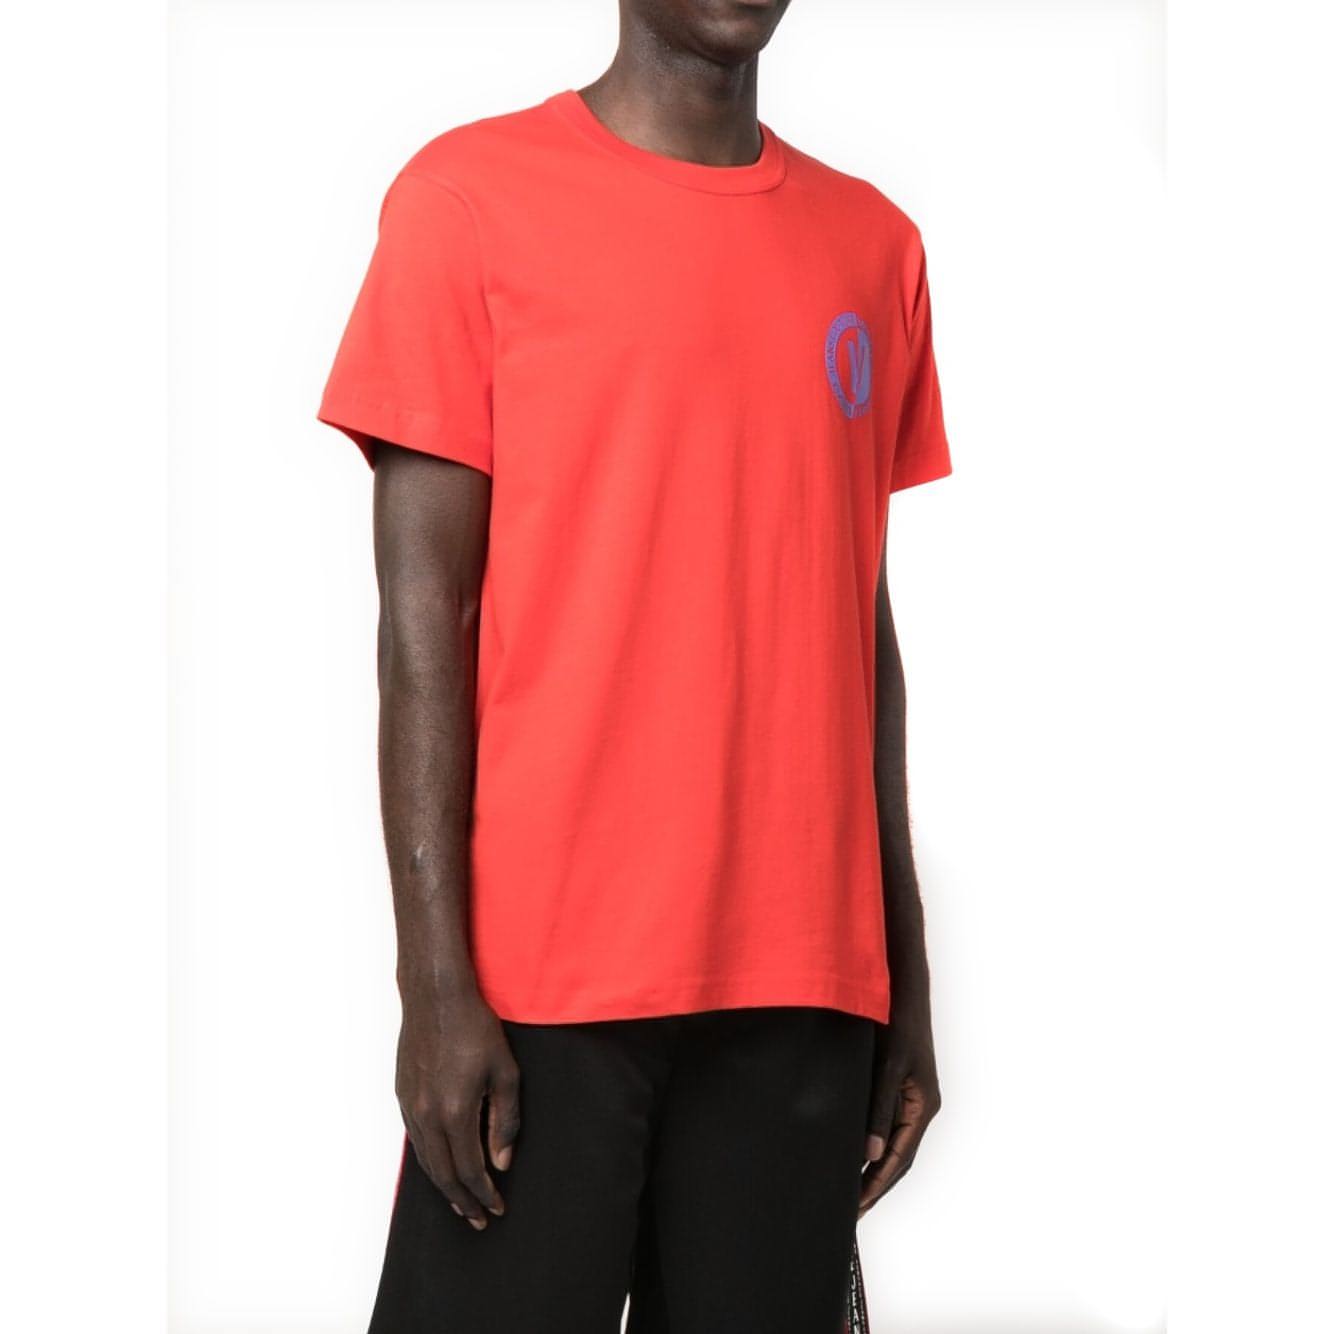 VERSACE JEANS COUTURE vyriški raudoni marškinėliai New vemblem small t-shirt